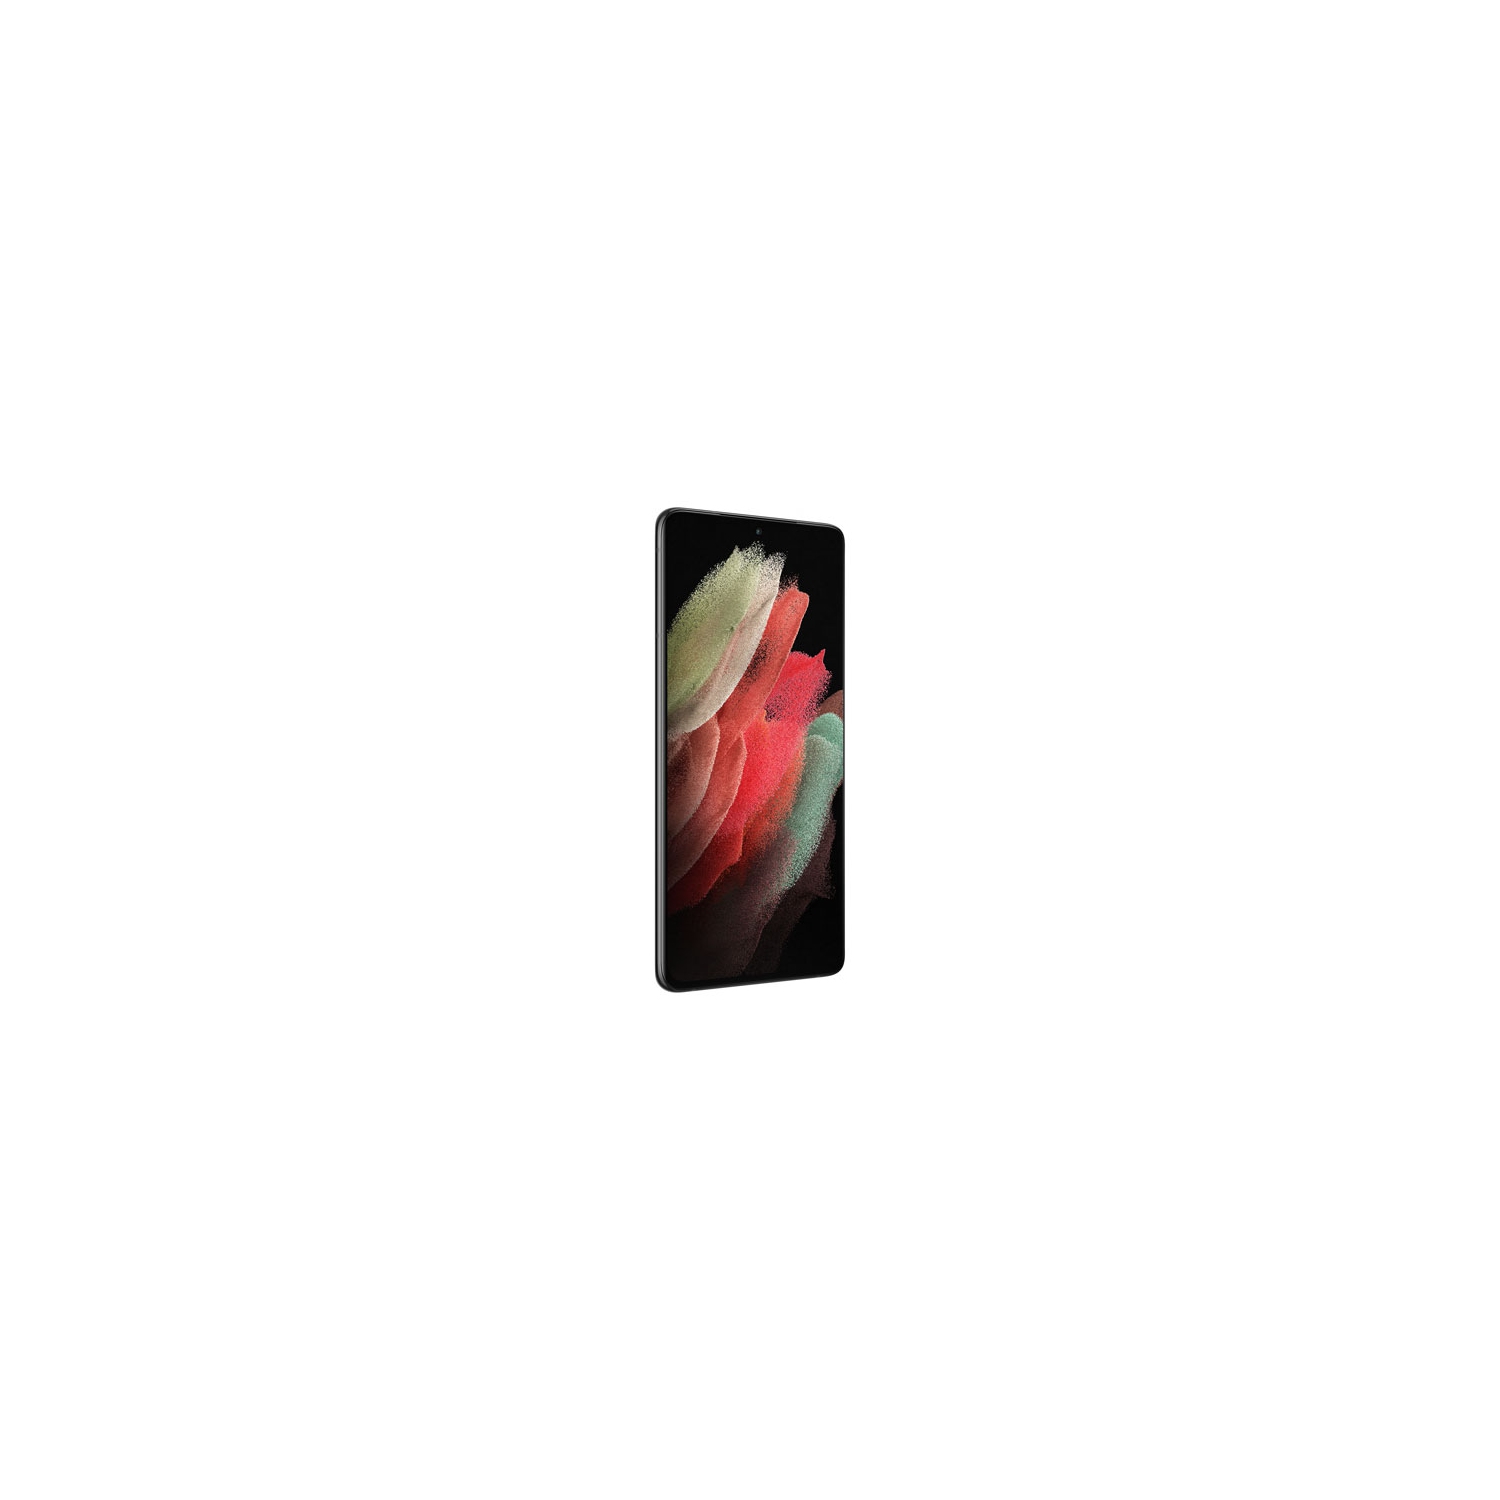 Refurbished (Good) - Samsung Galaxy S21 Ultra 5G 512GB Smartphone - Phantom Black - Unlocked